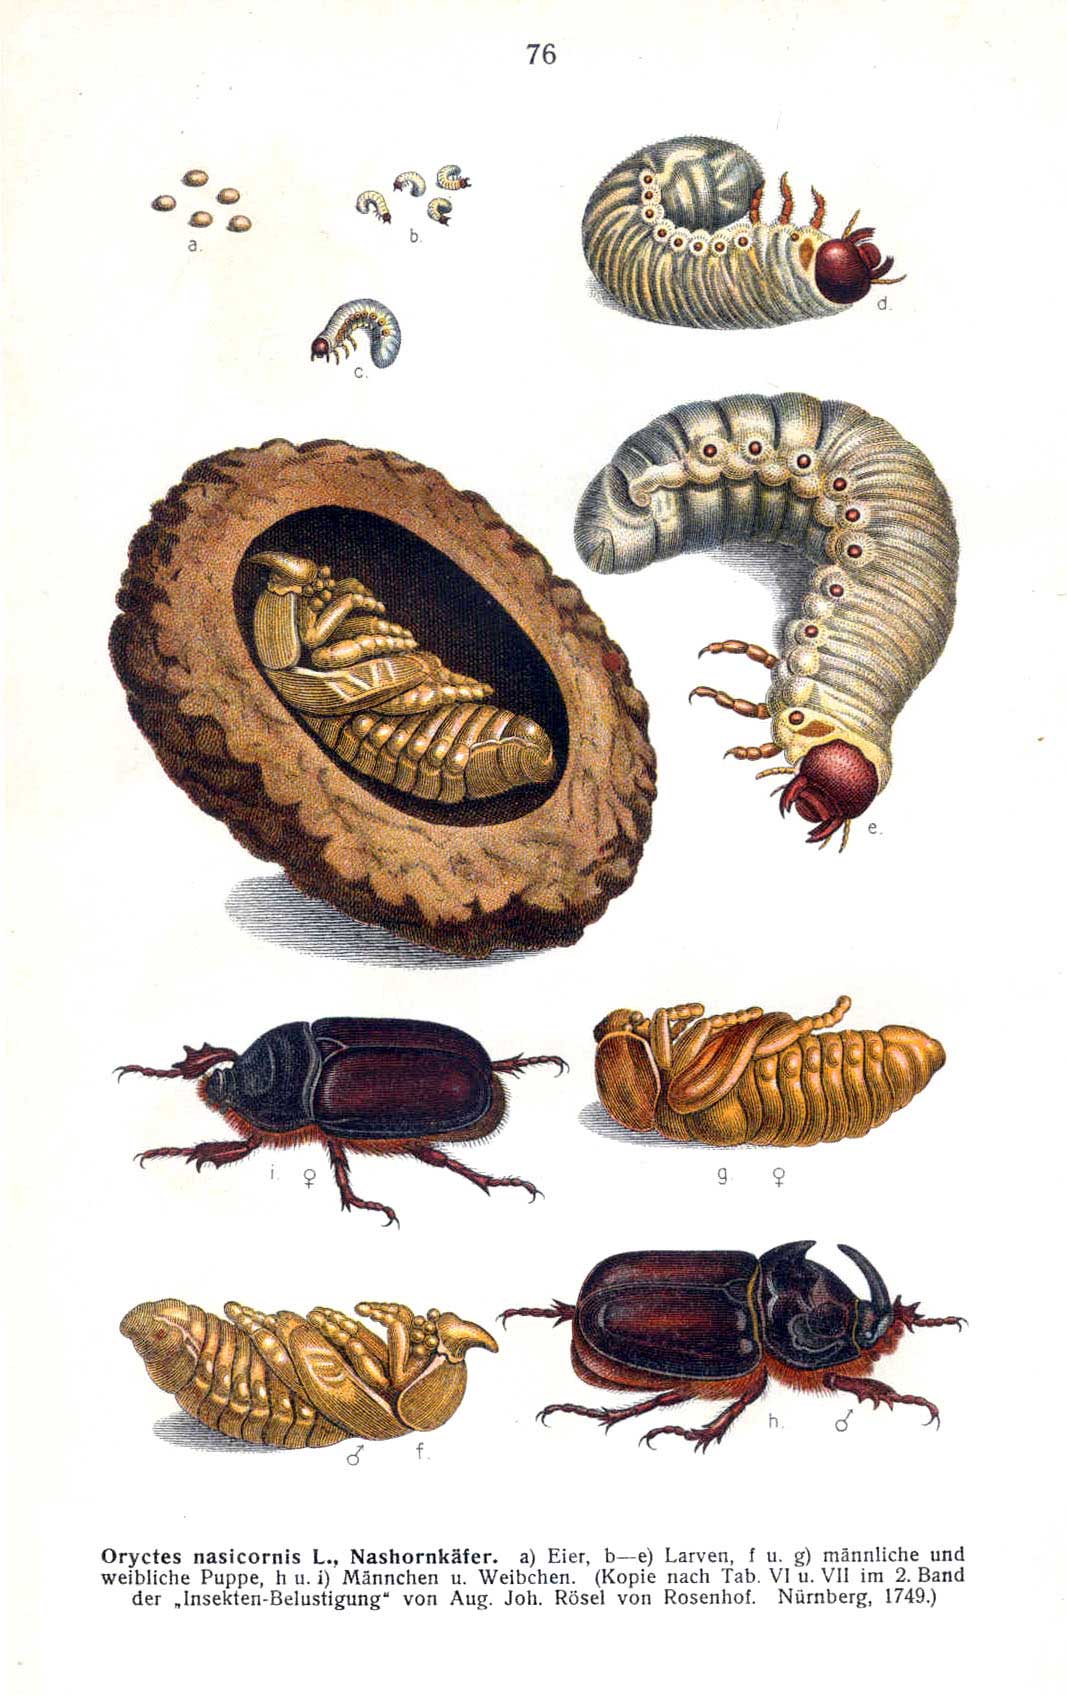 Rhinoceros beetle development stages